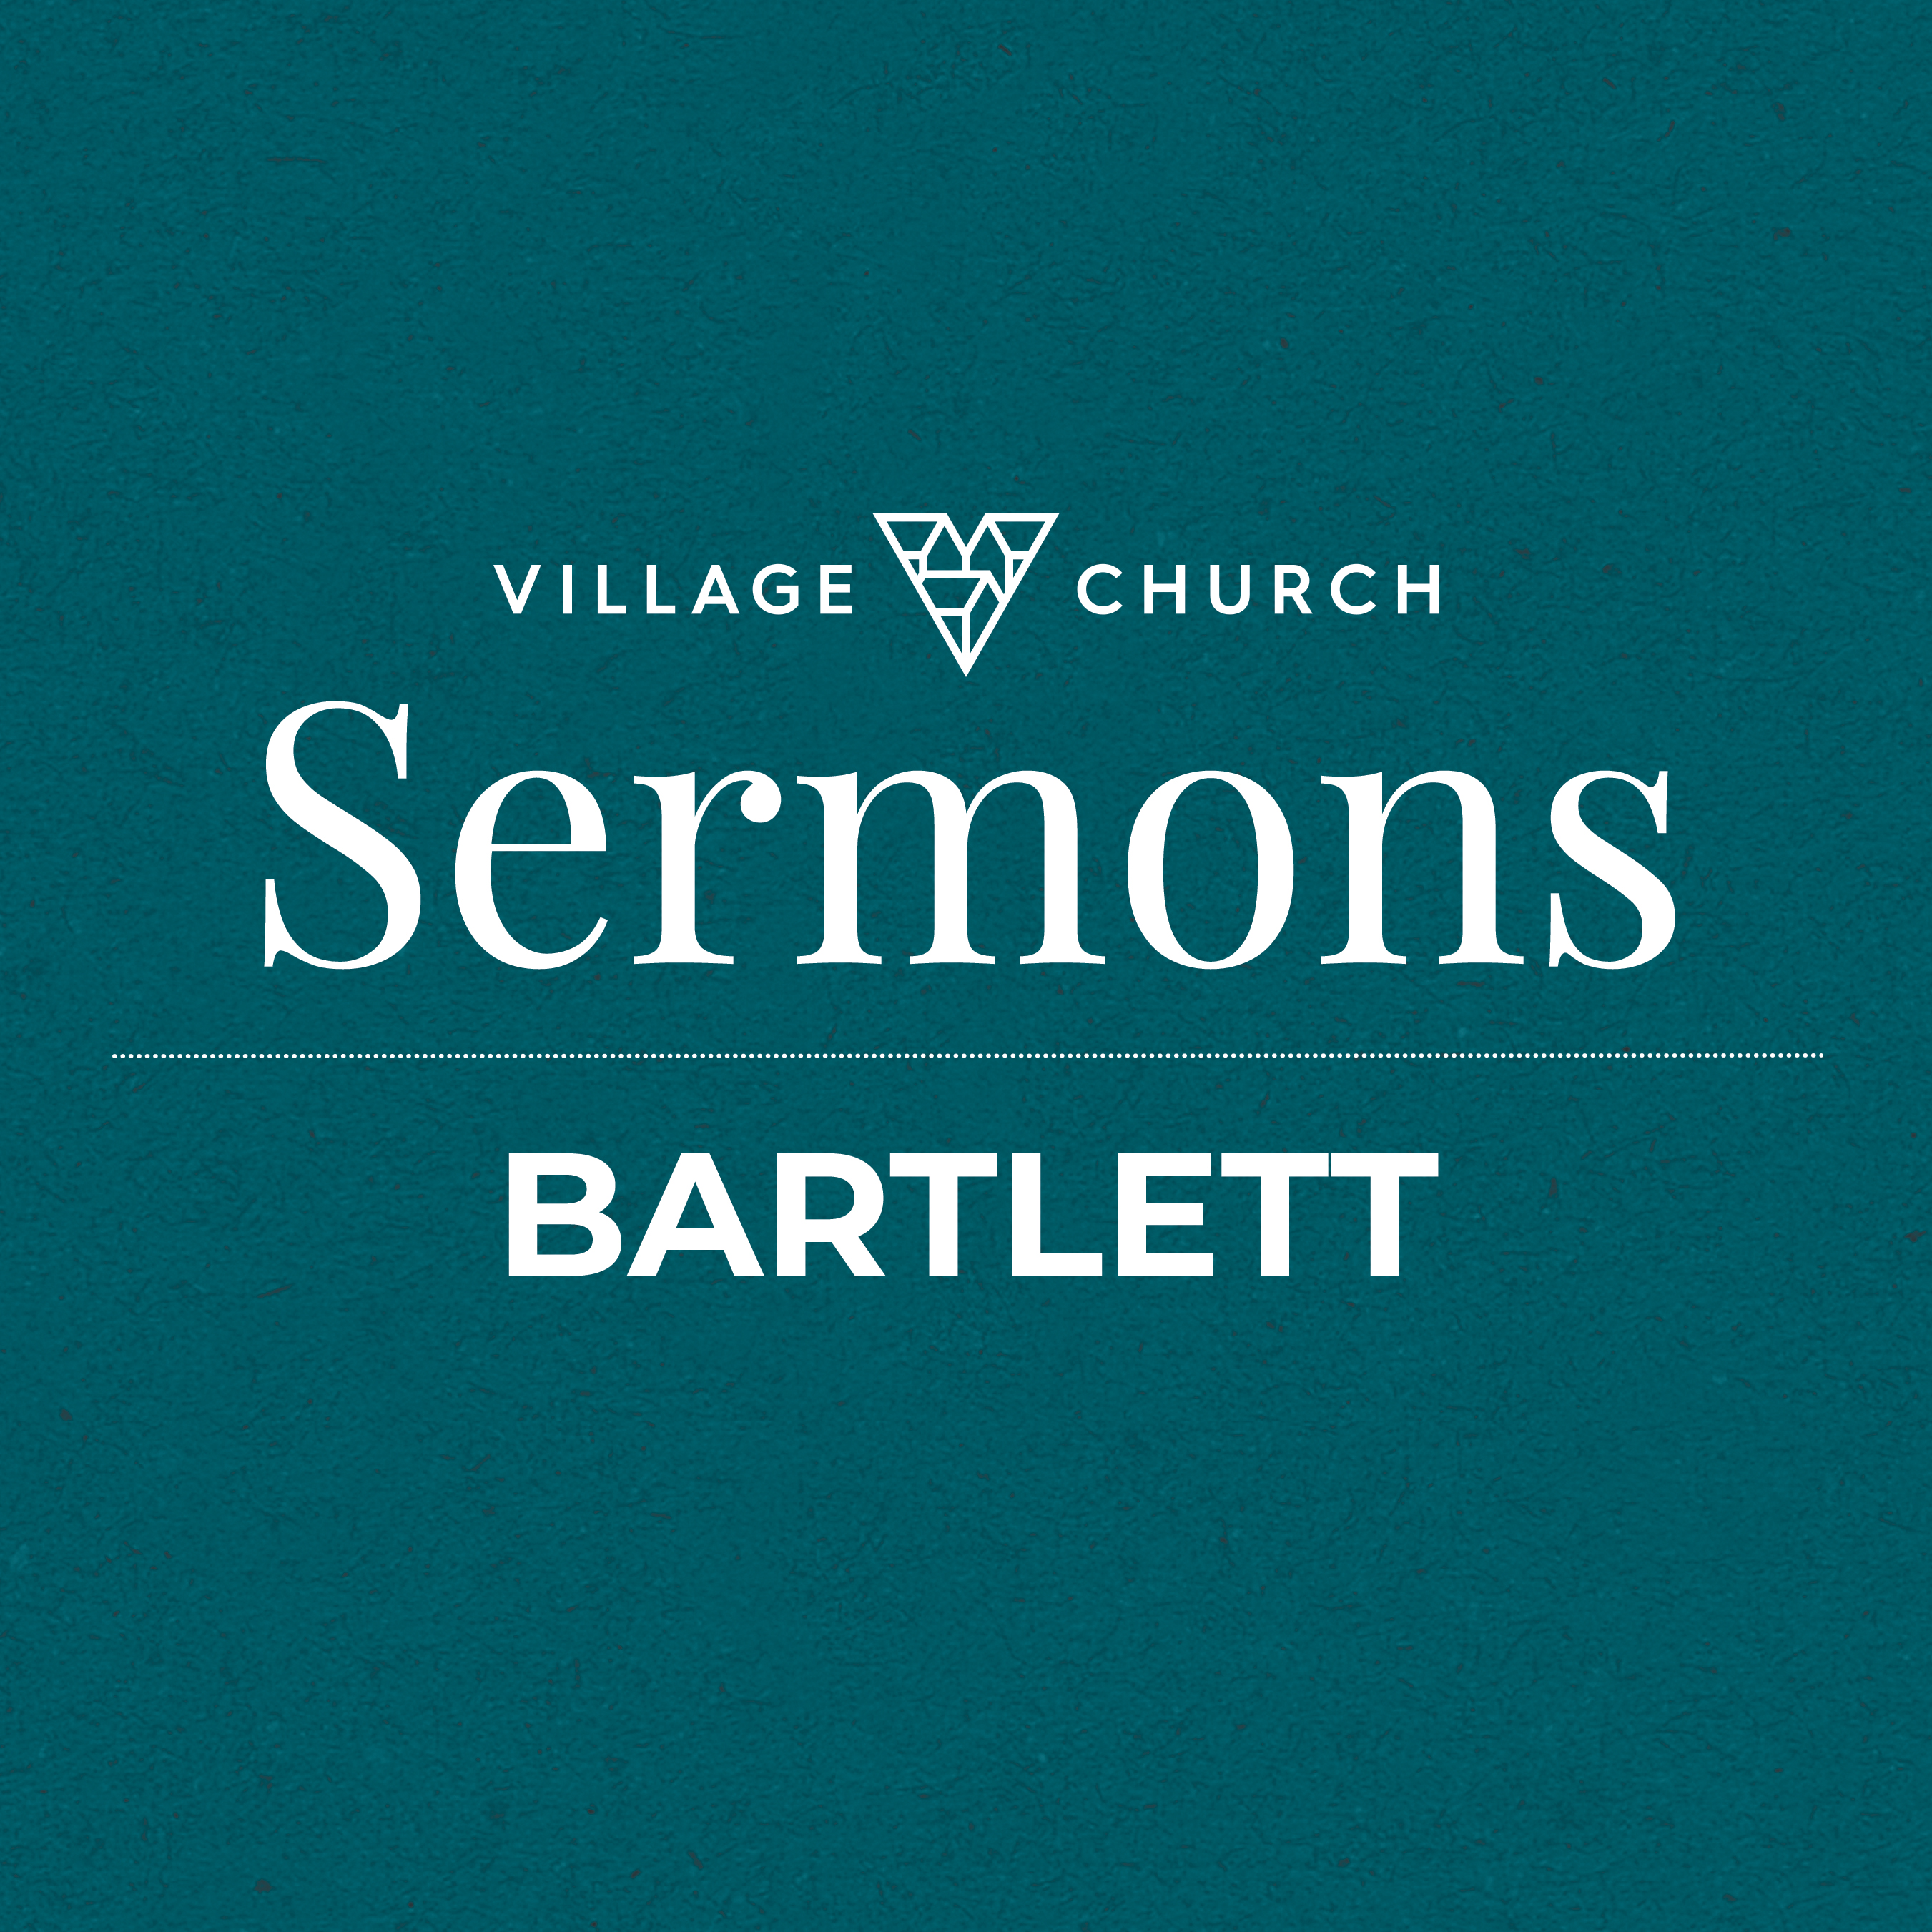 Village Church of Bartlett: Sermons